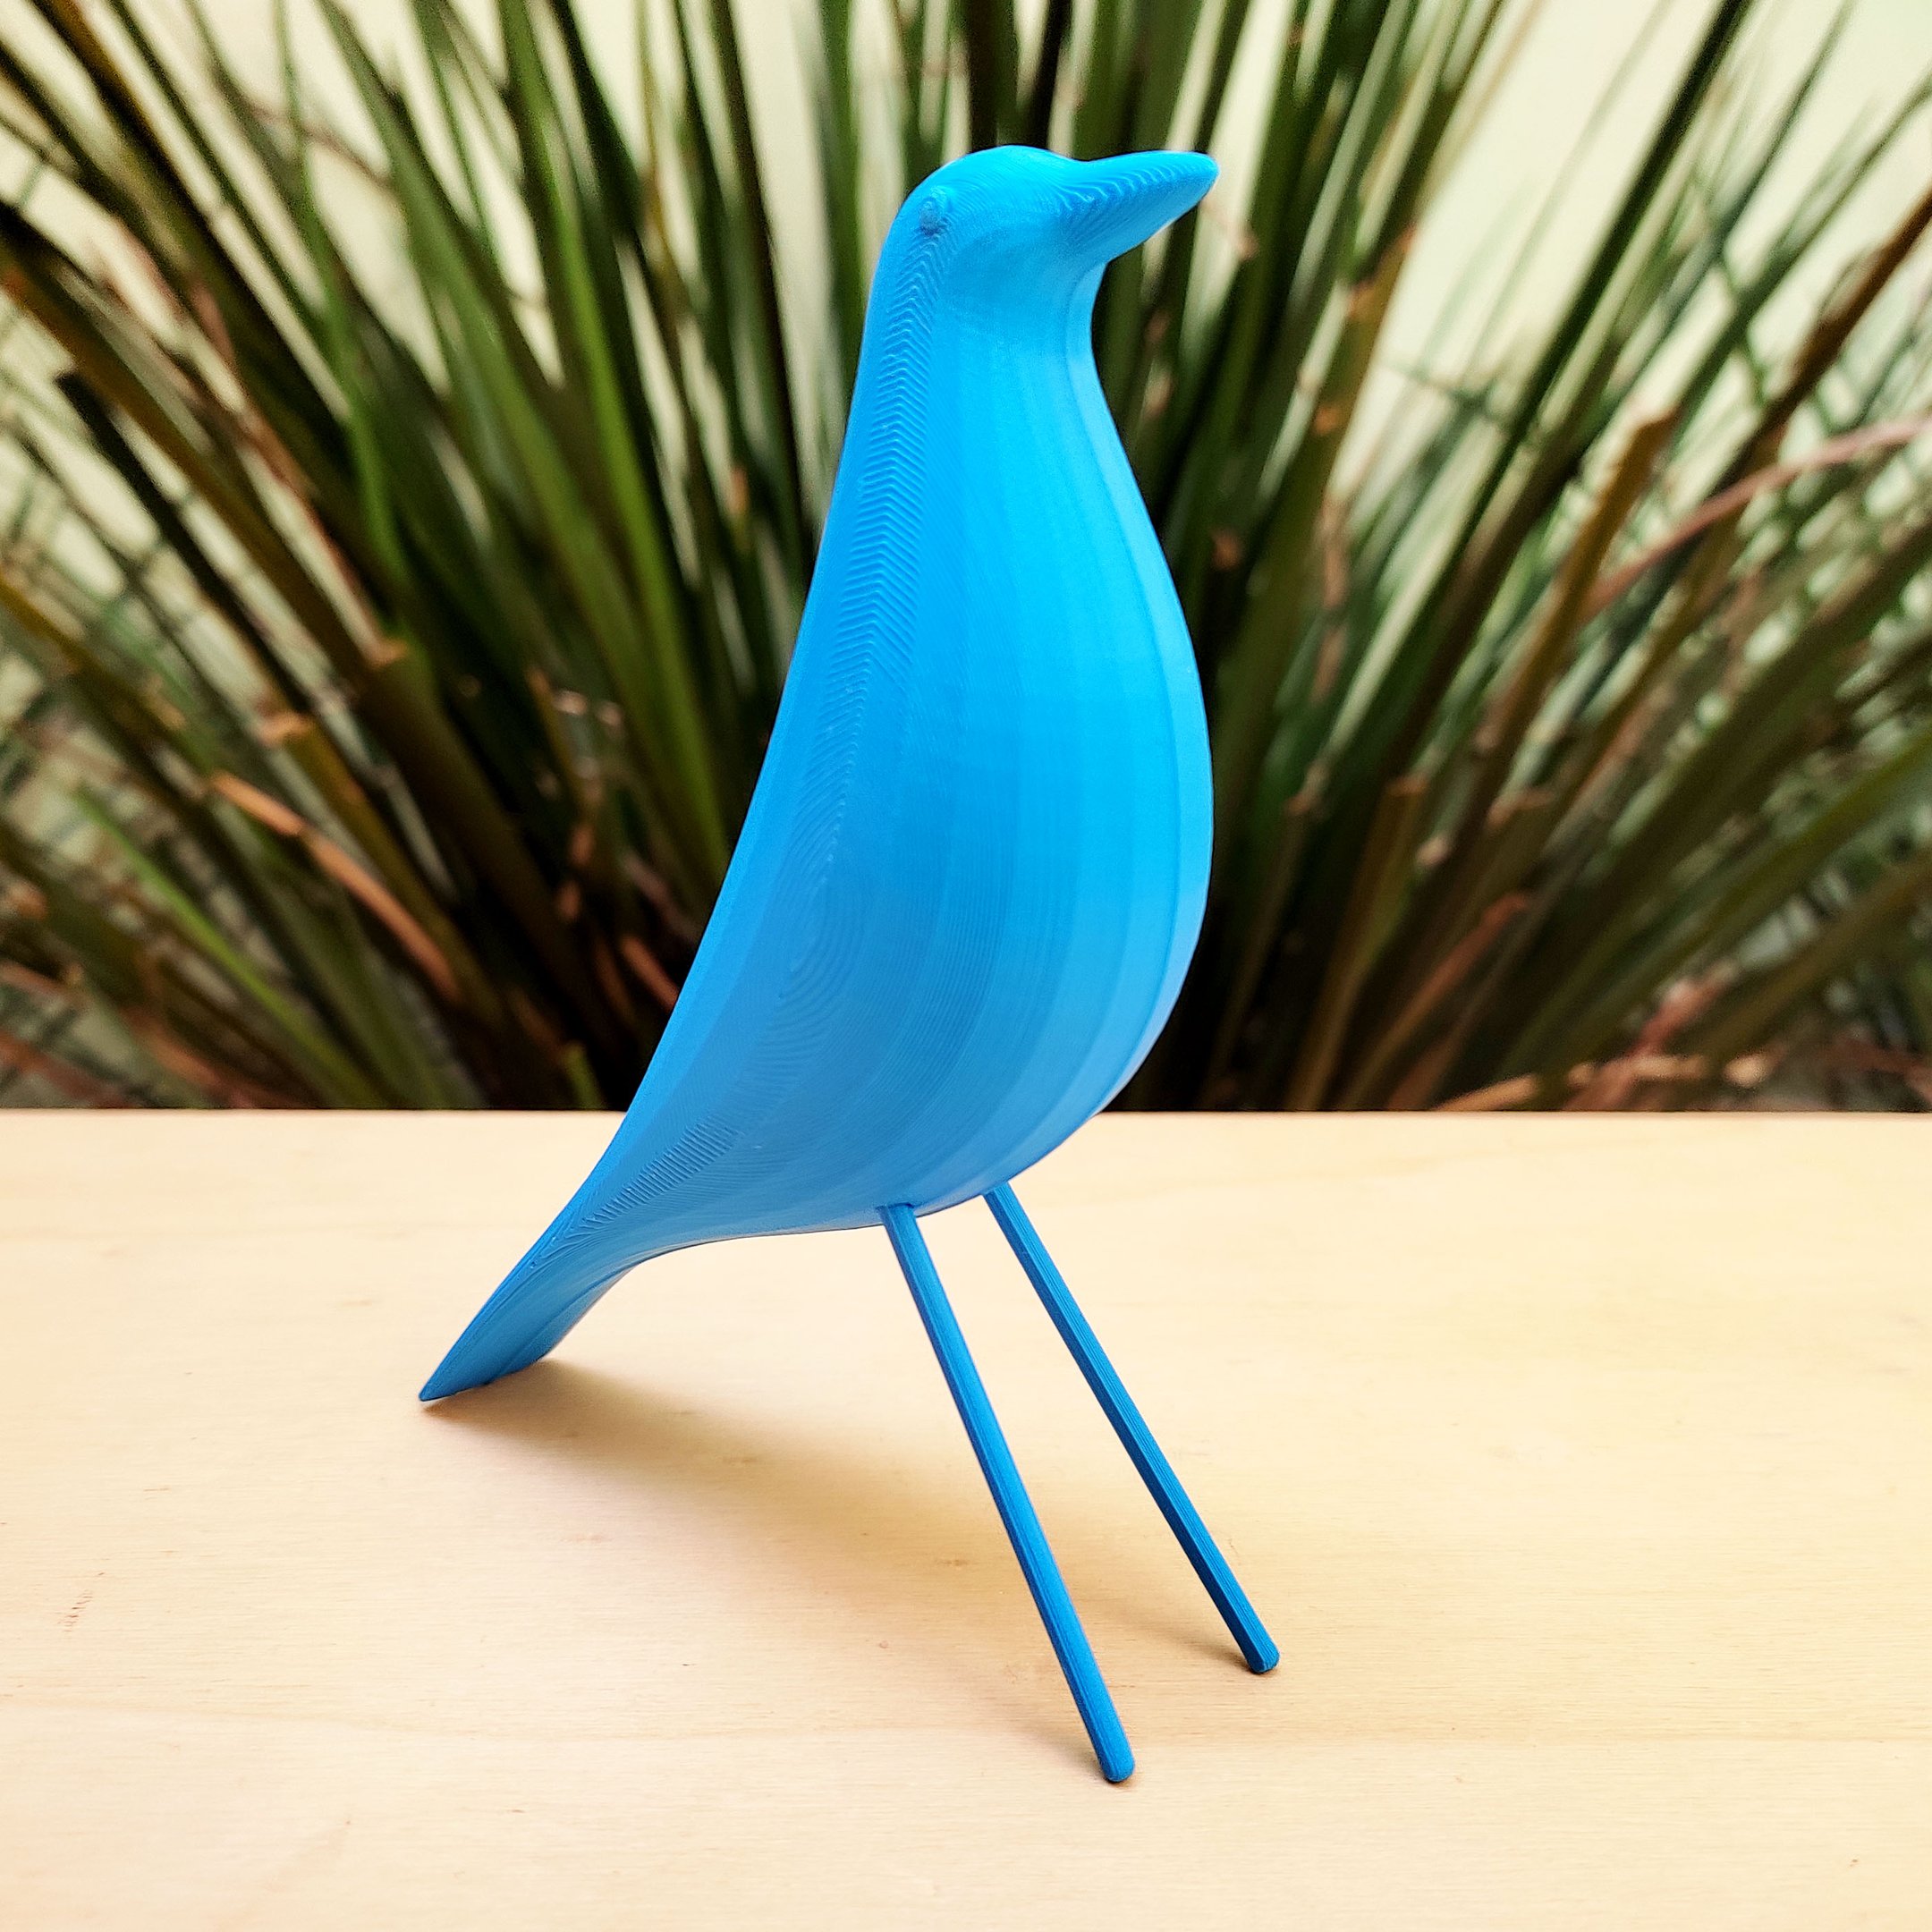 Pássaro P Decorativo - 11,6 Cm Altura -Toque 3D:Azul Claro - 5